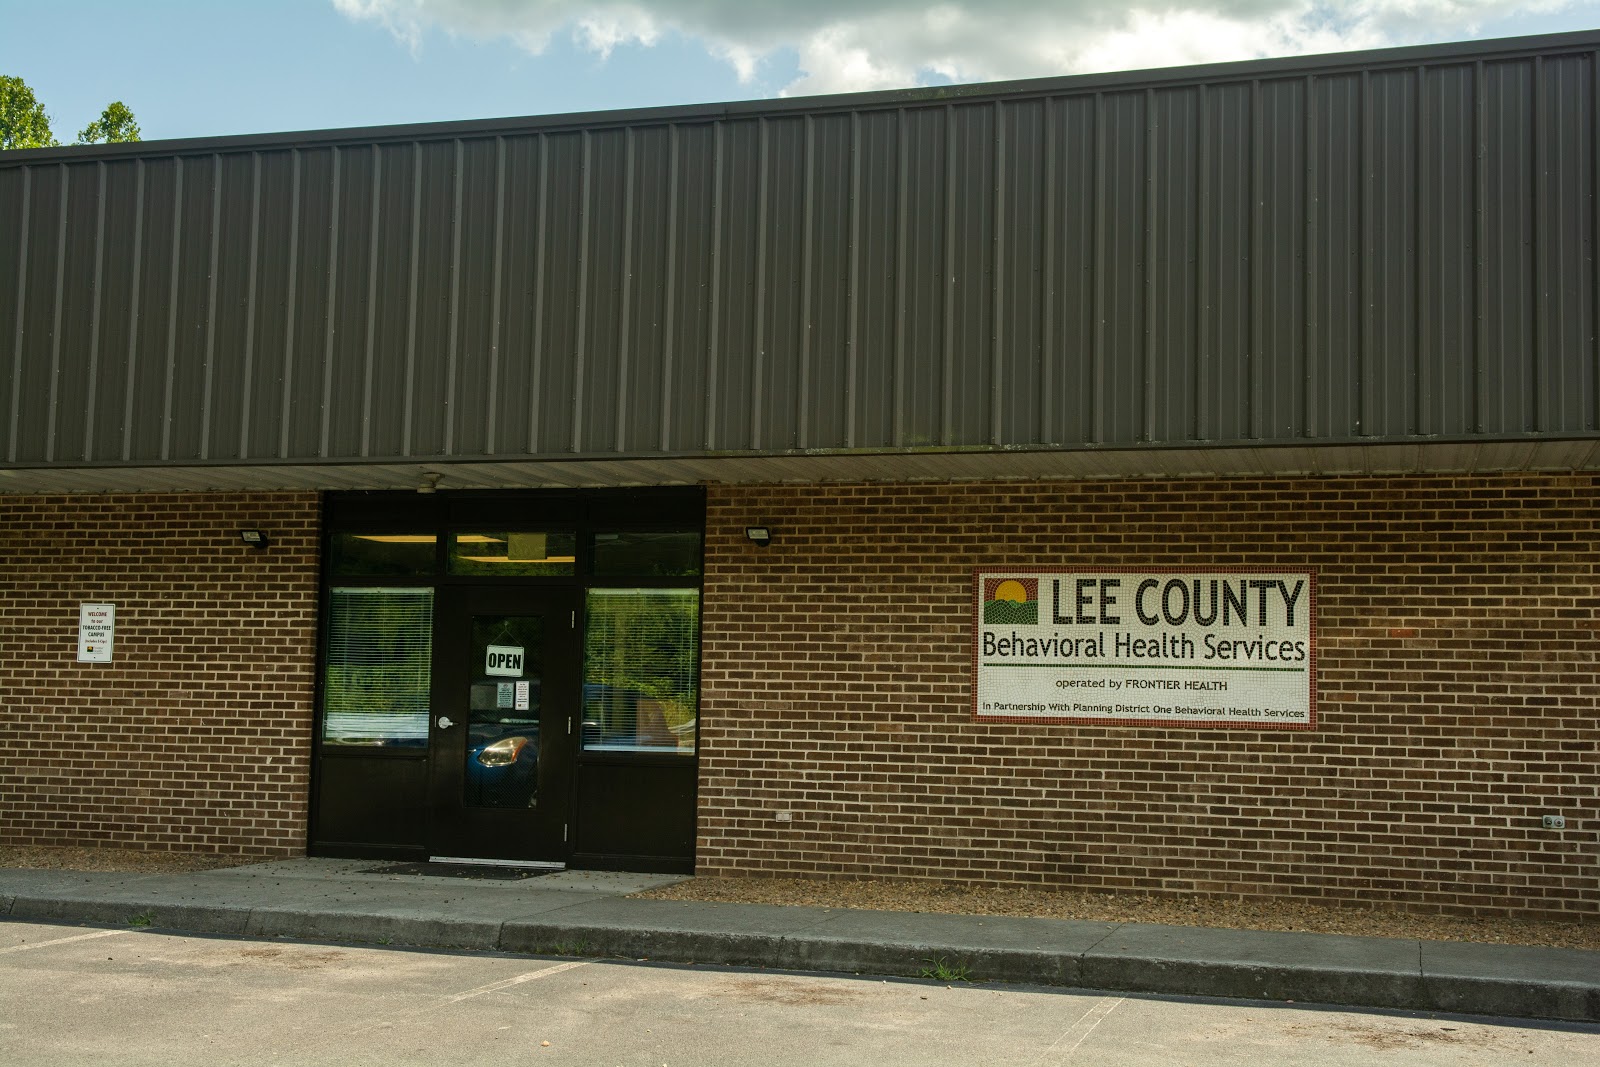 Frontier Health - Lee County Behavioral Health Services